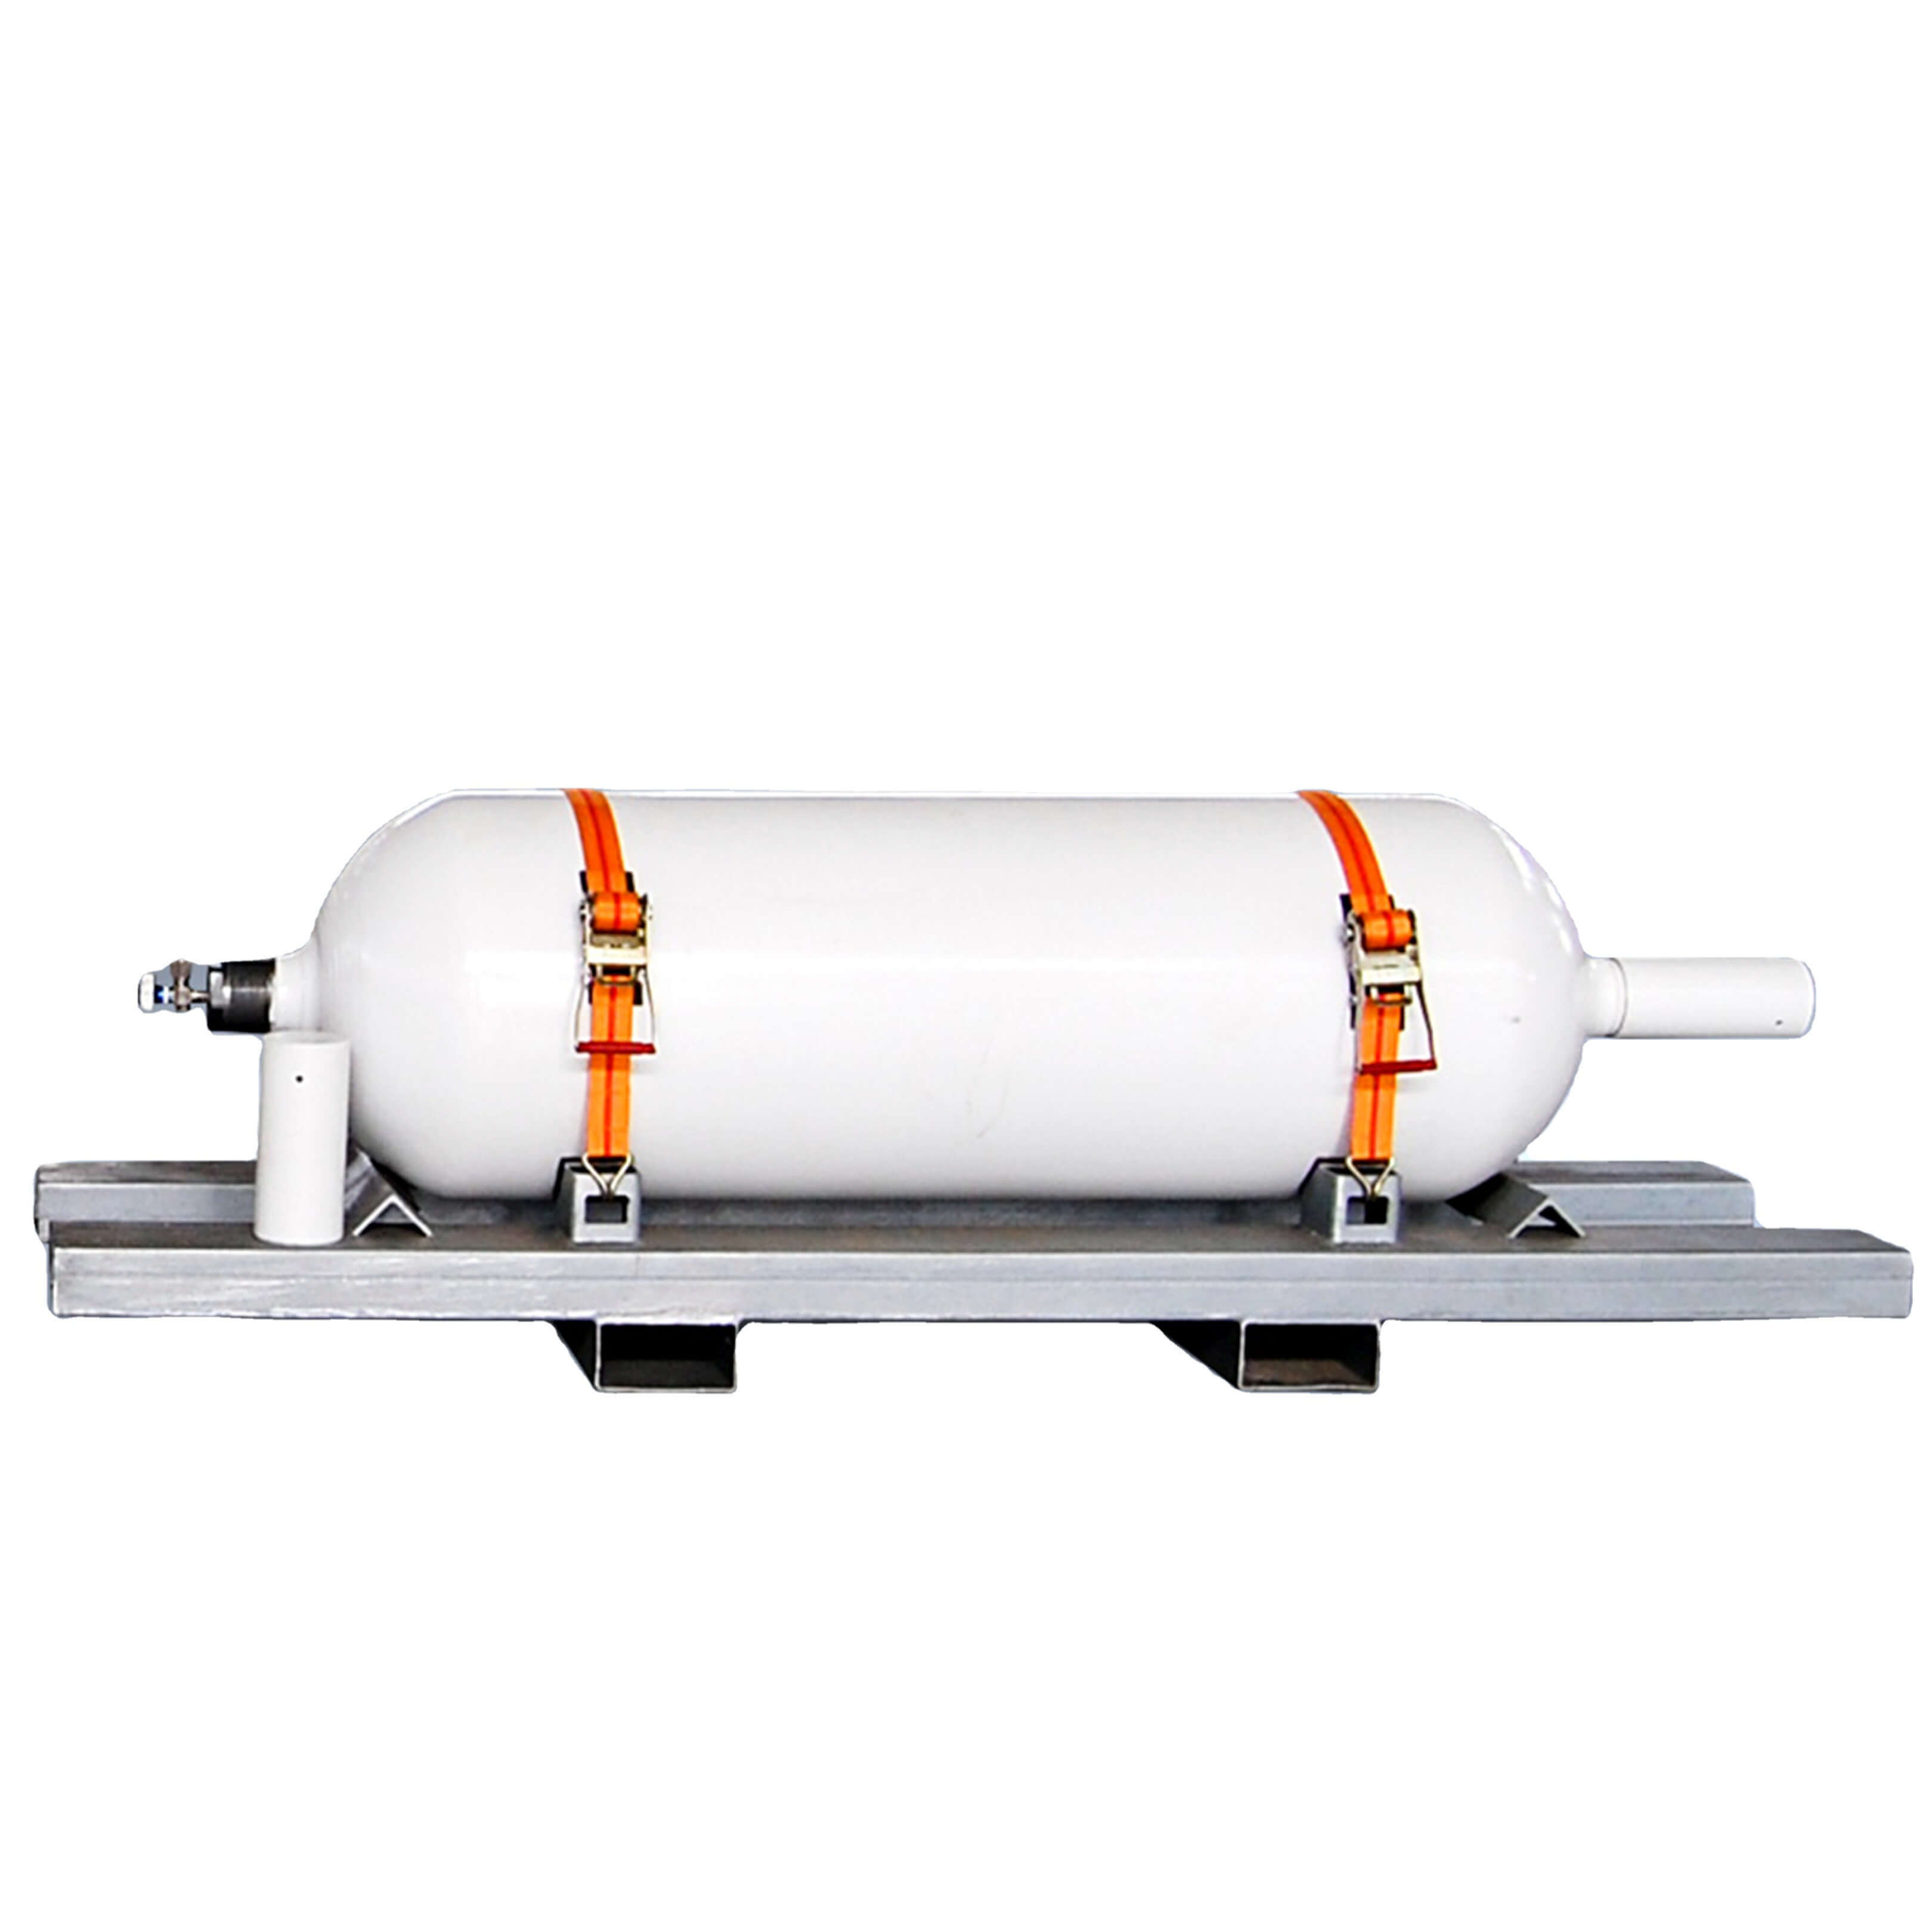 Y-Ton High-Purity High Pressure Industrial Gas Cylinders 16.6MPa Filling N2, He, SF6, NF3, N2O